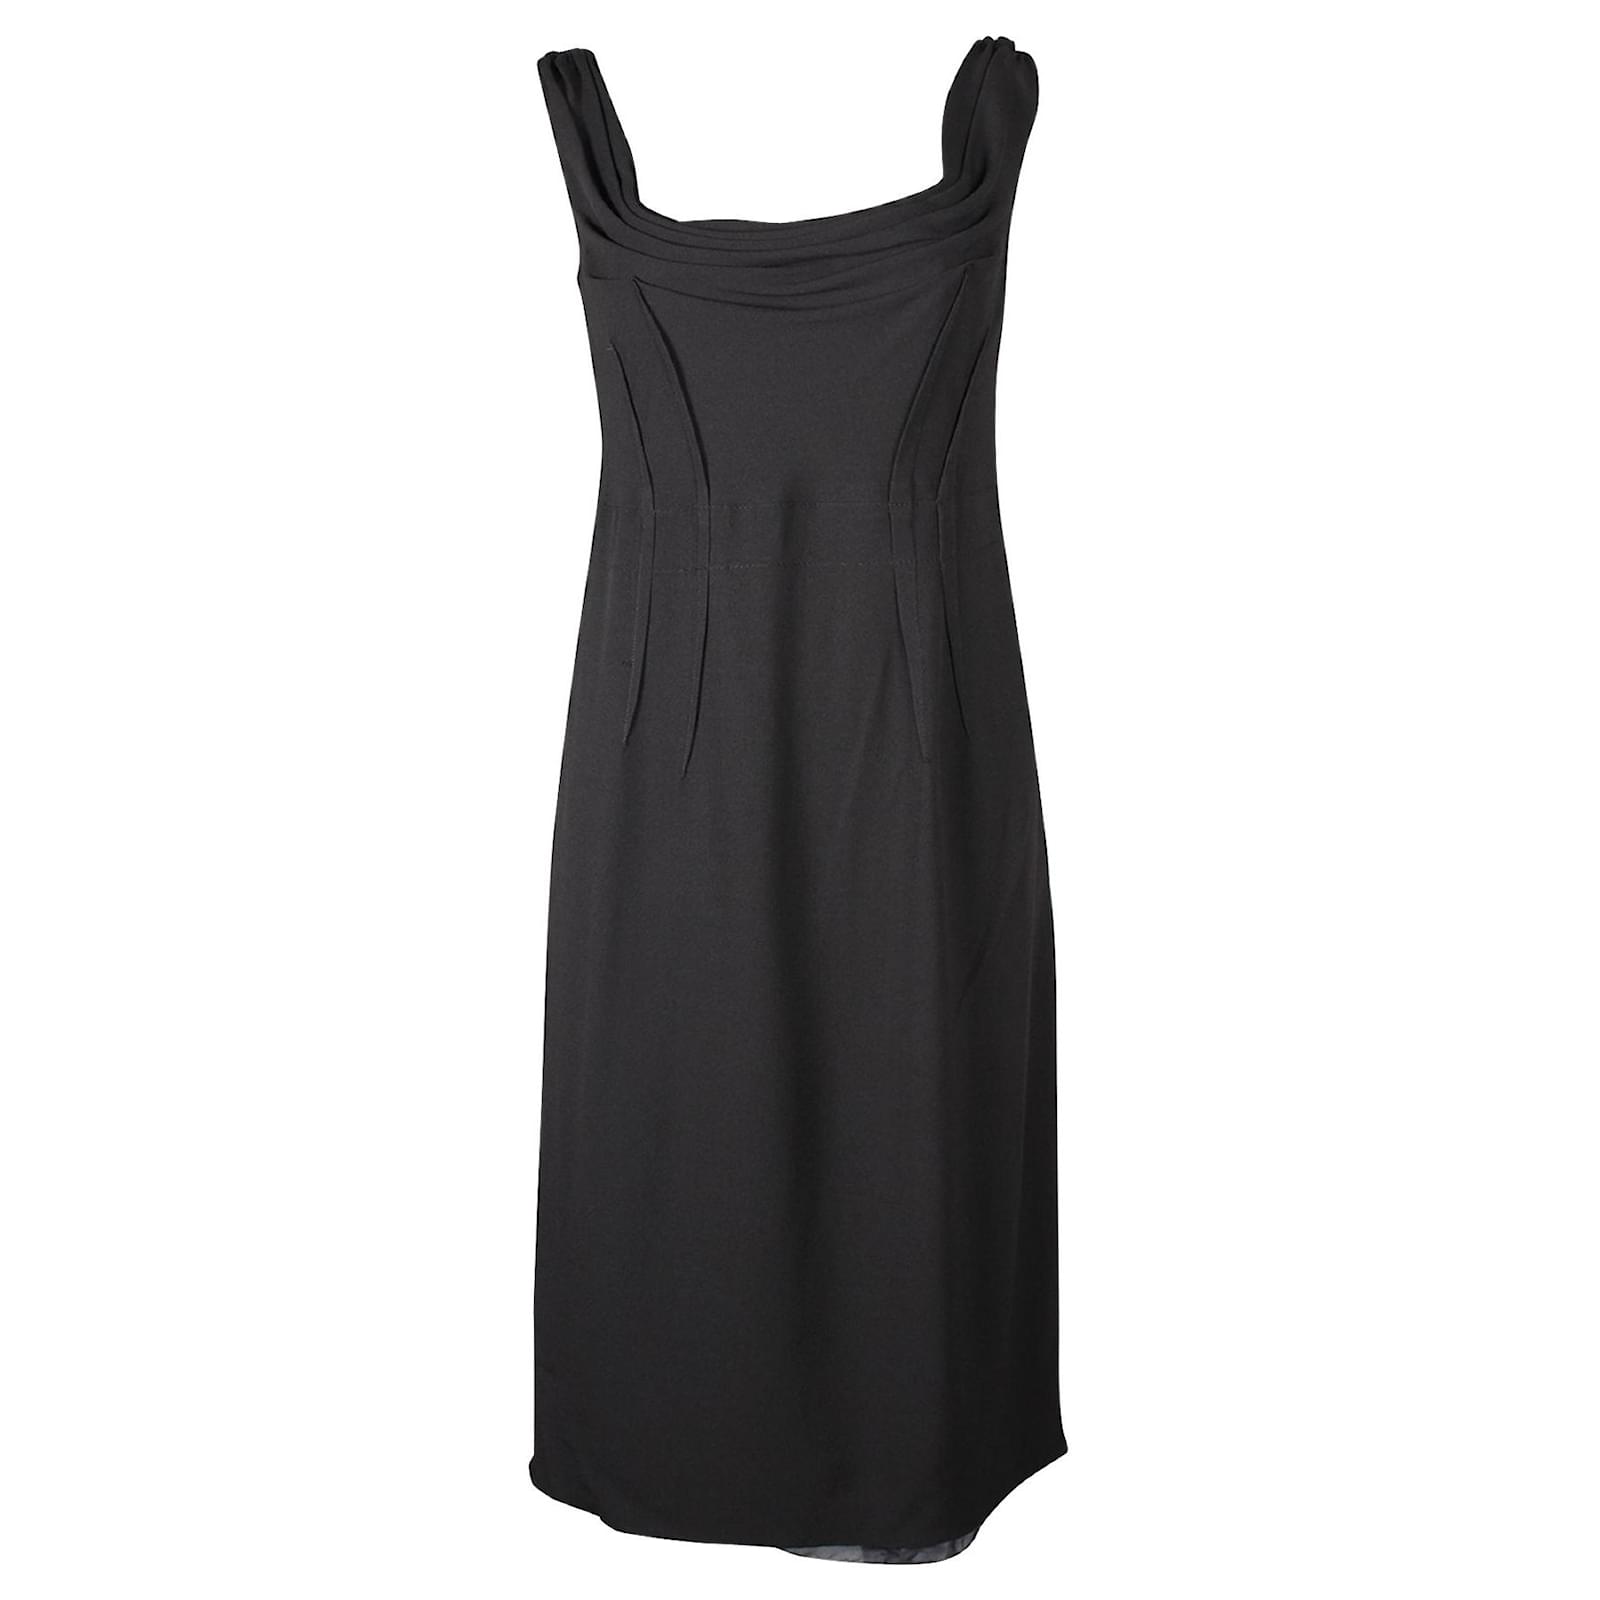 Prada Black Midi Dress with Cowl Neck Acetate Cellulose fibre ref ...